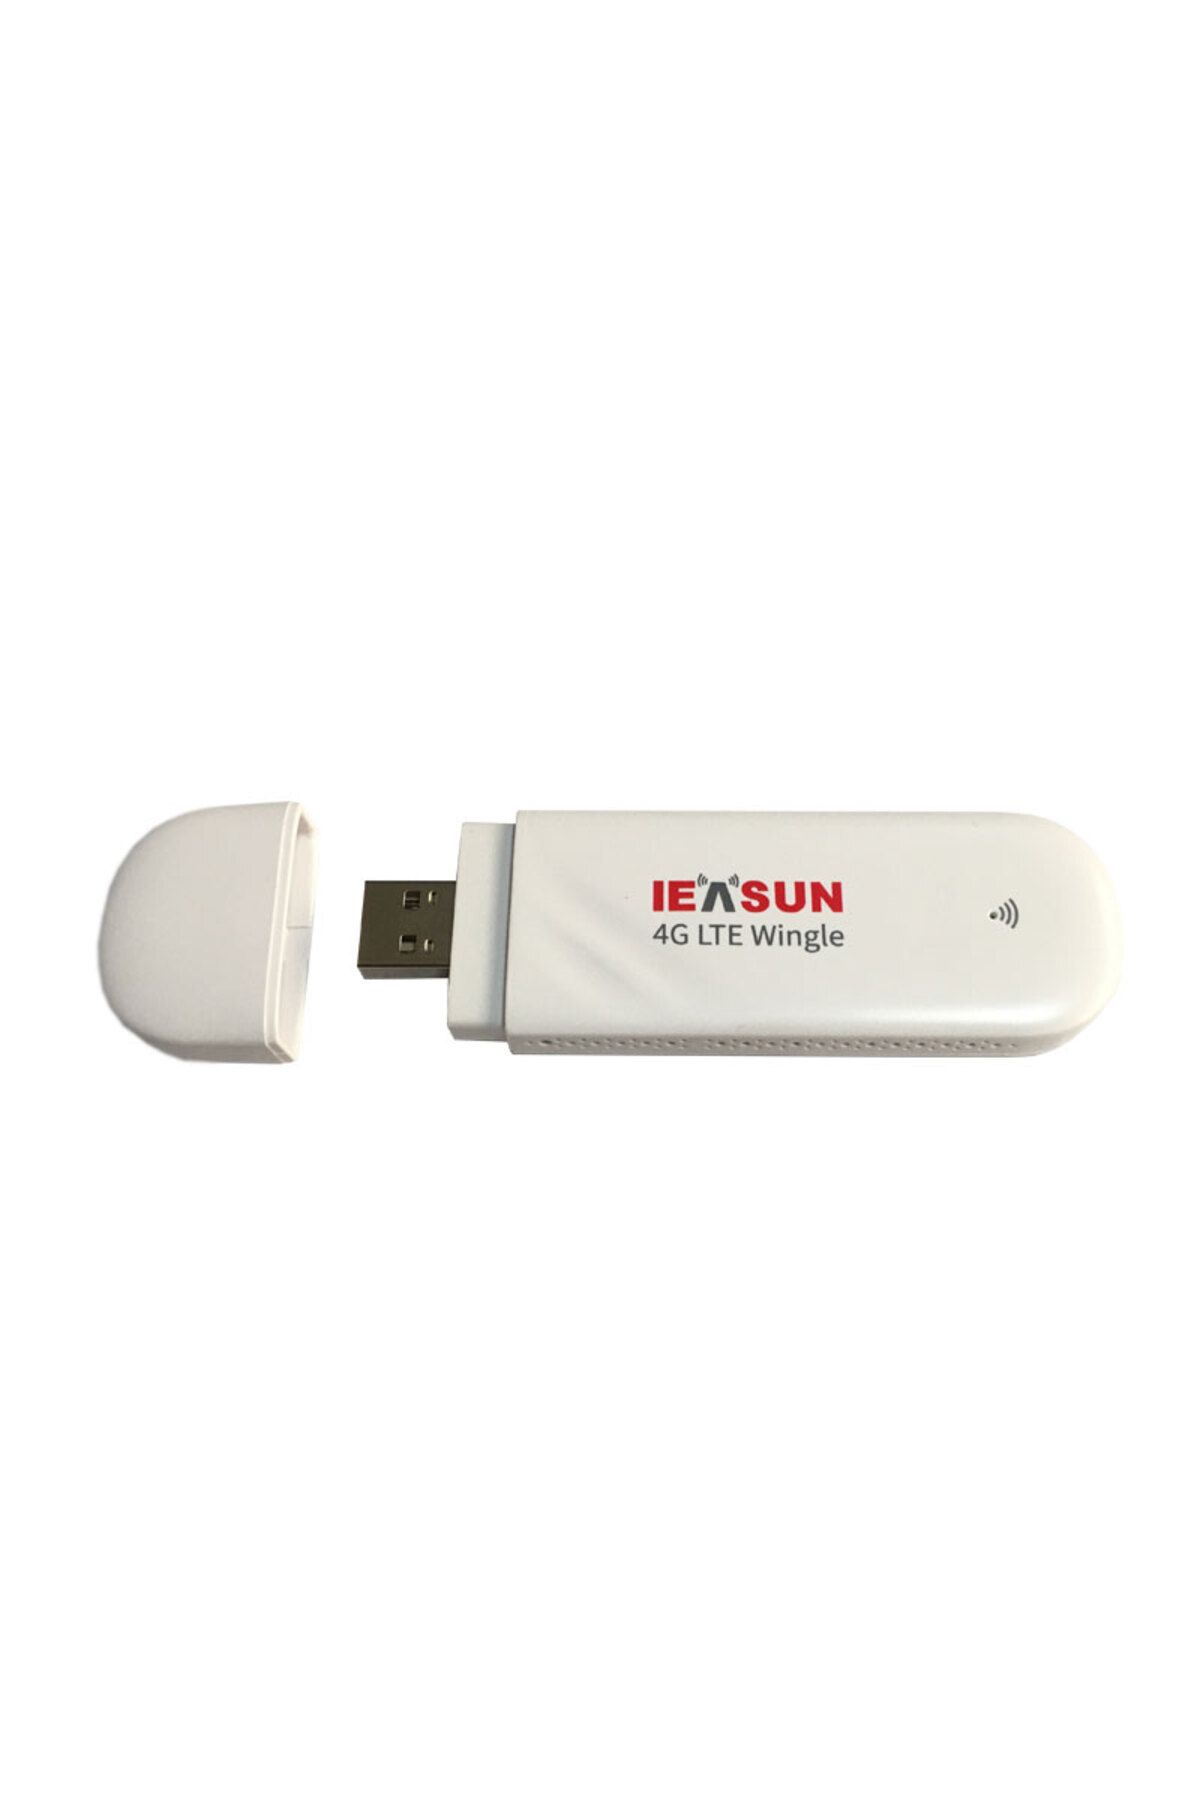 IEASUN 4G LTE wingle modem Taşınabilir Mobil modem 150 Mbps